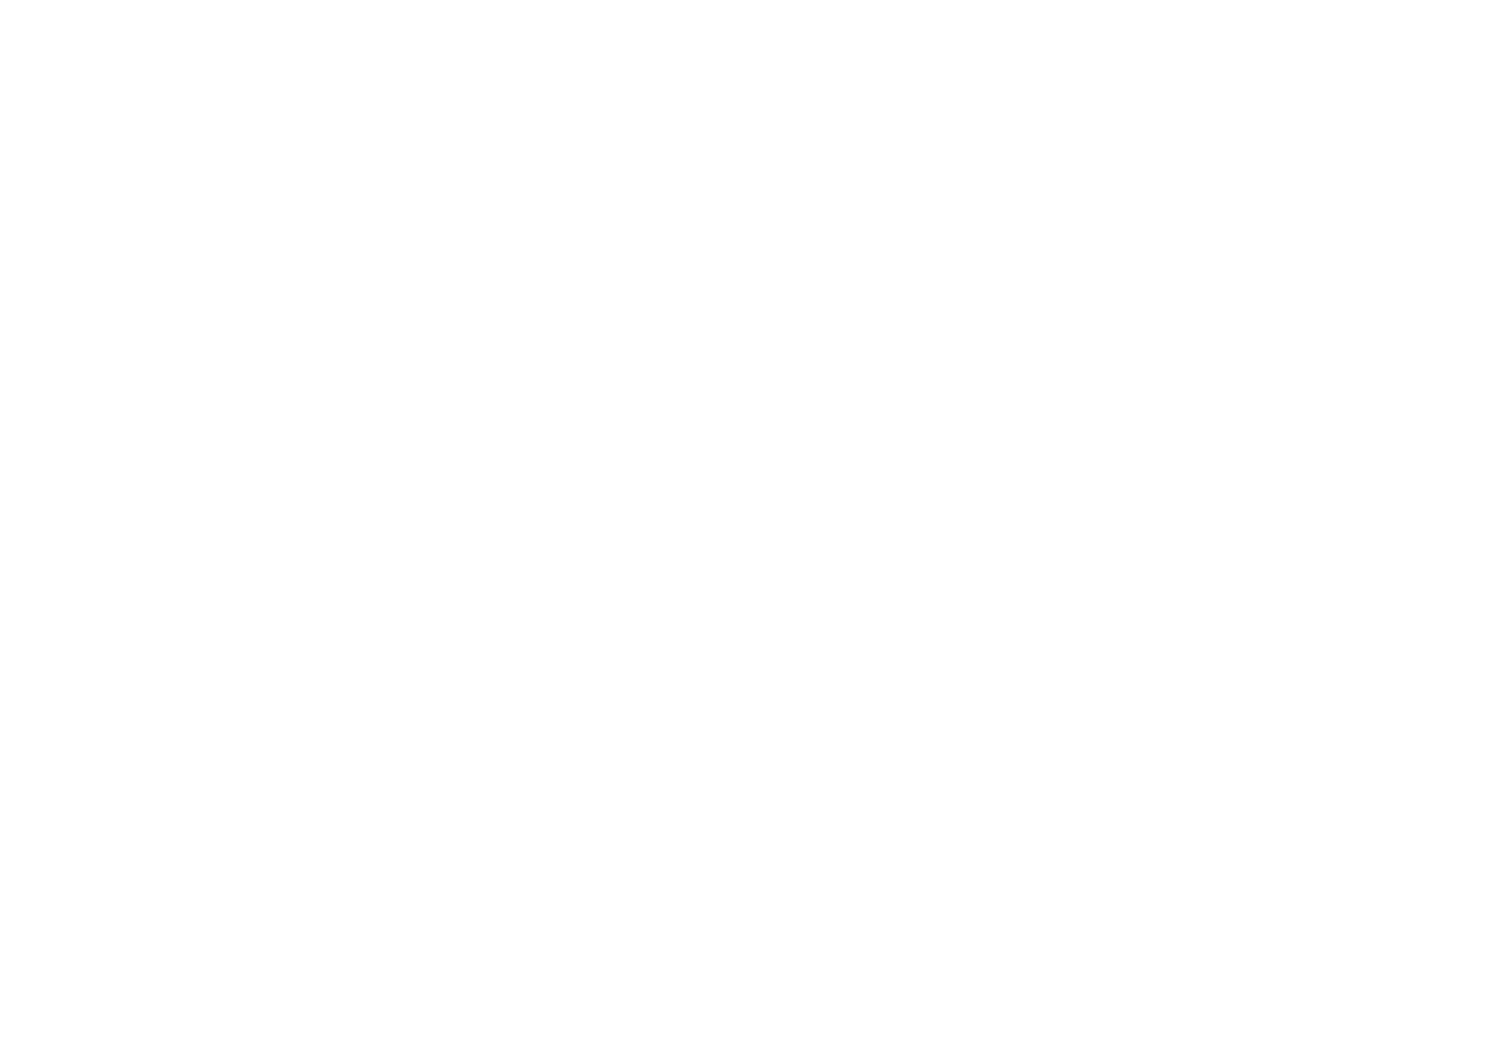 Teddy Giles | DFW Photographer and Graphic Designer